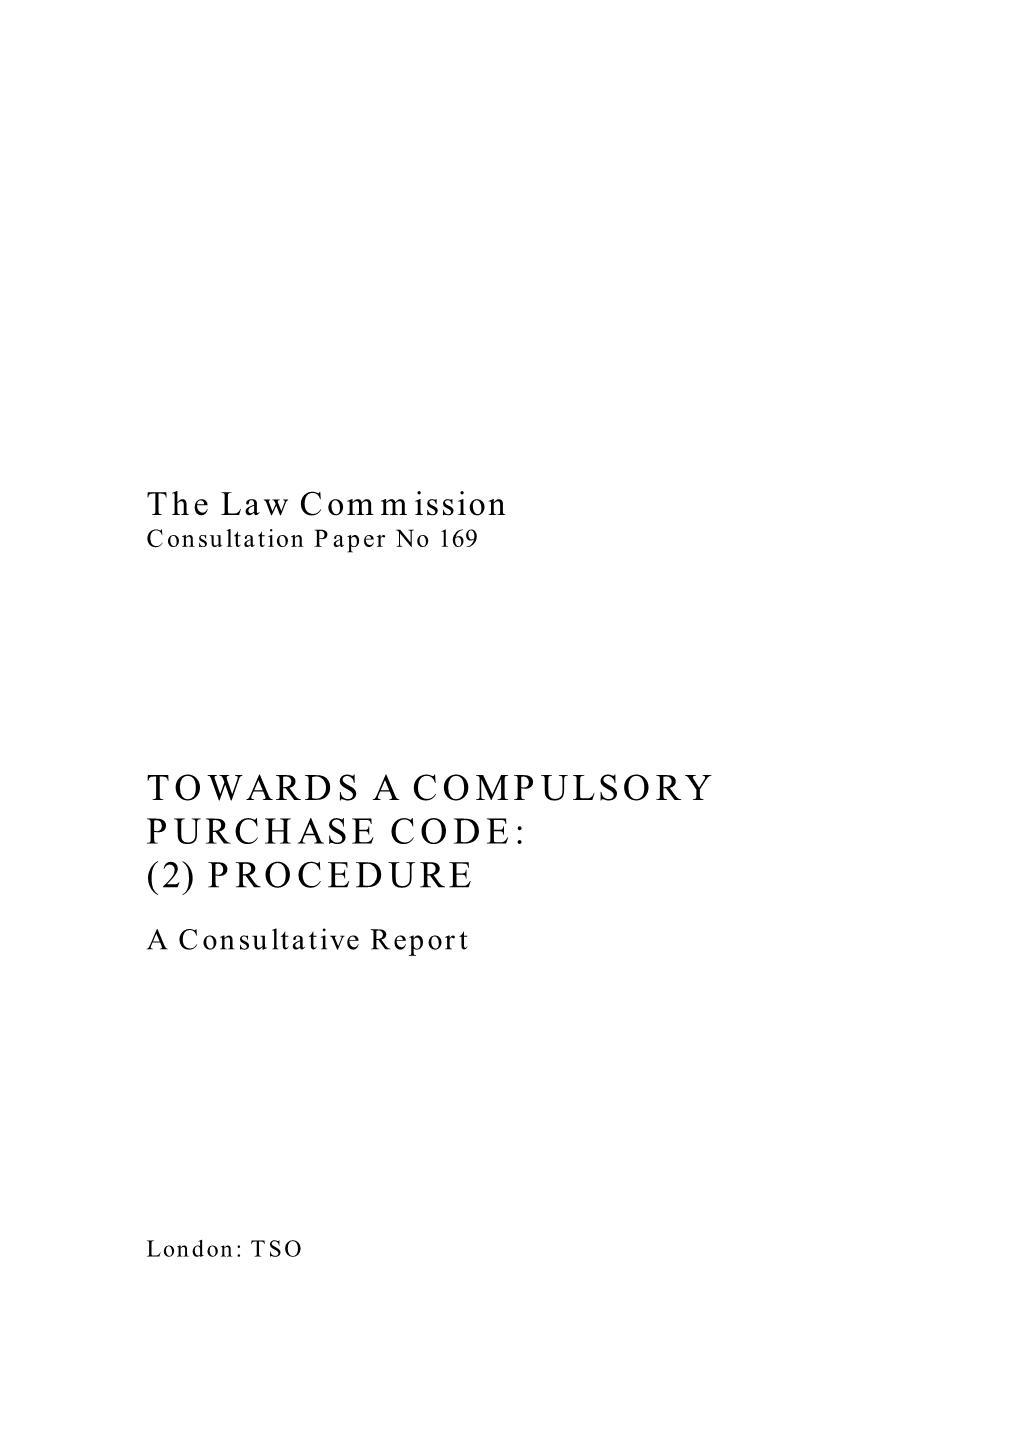 Towards a Compulsory Purchase Code: (2) Procedure